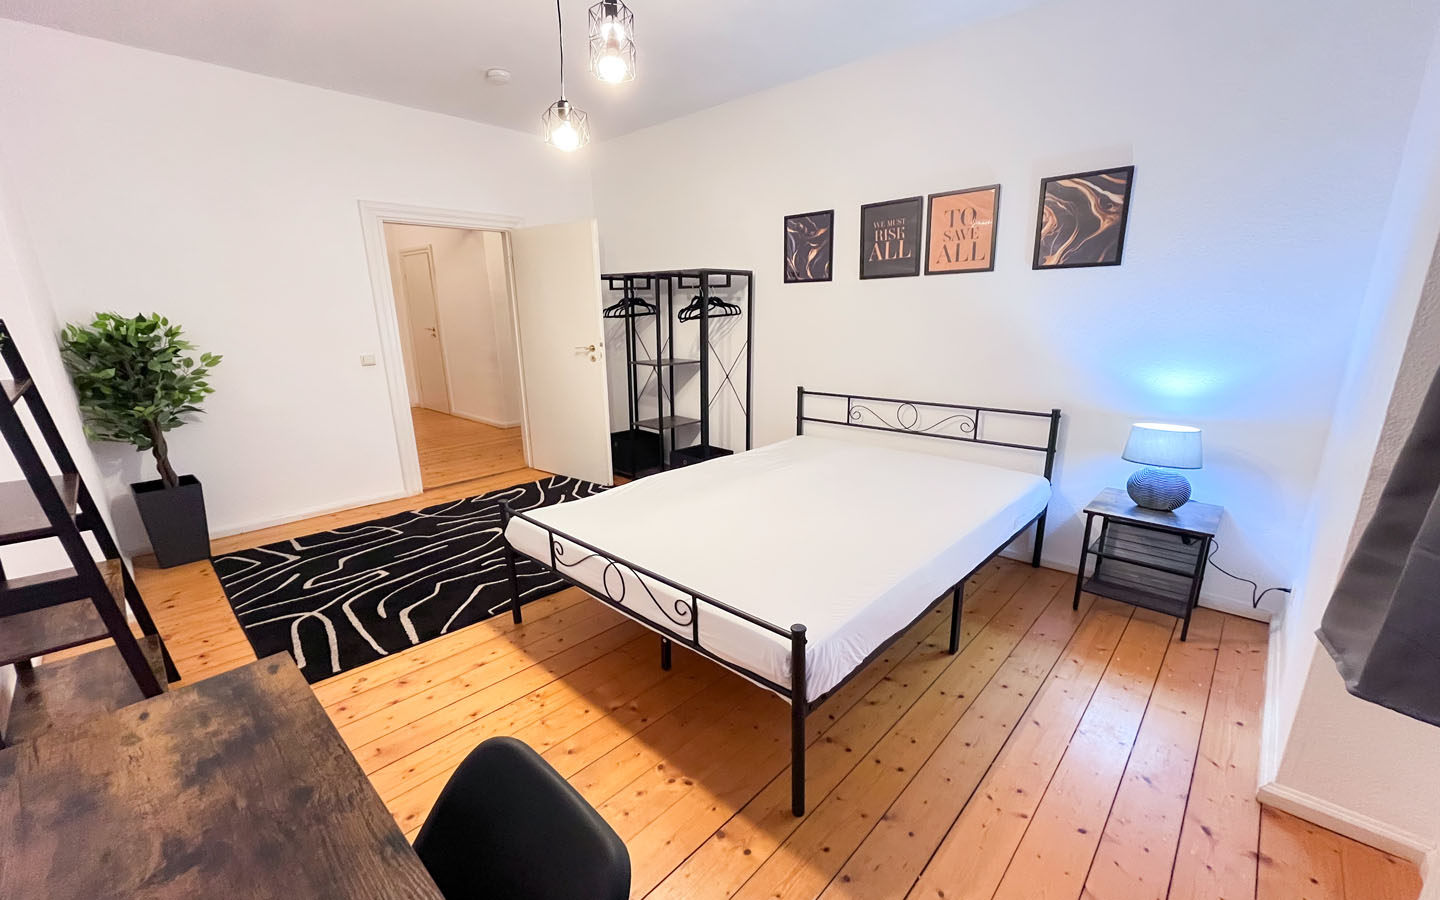 Private Room for rent in Berlin near Alexanderplatz